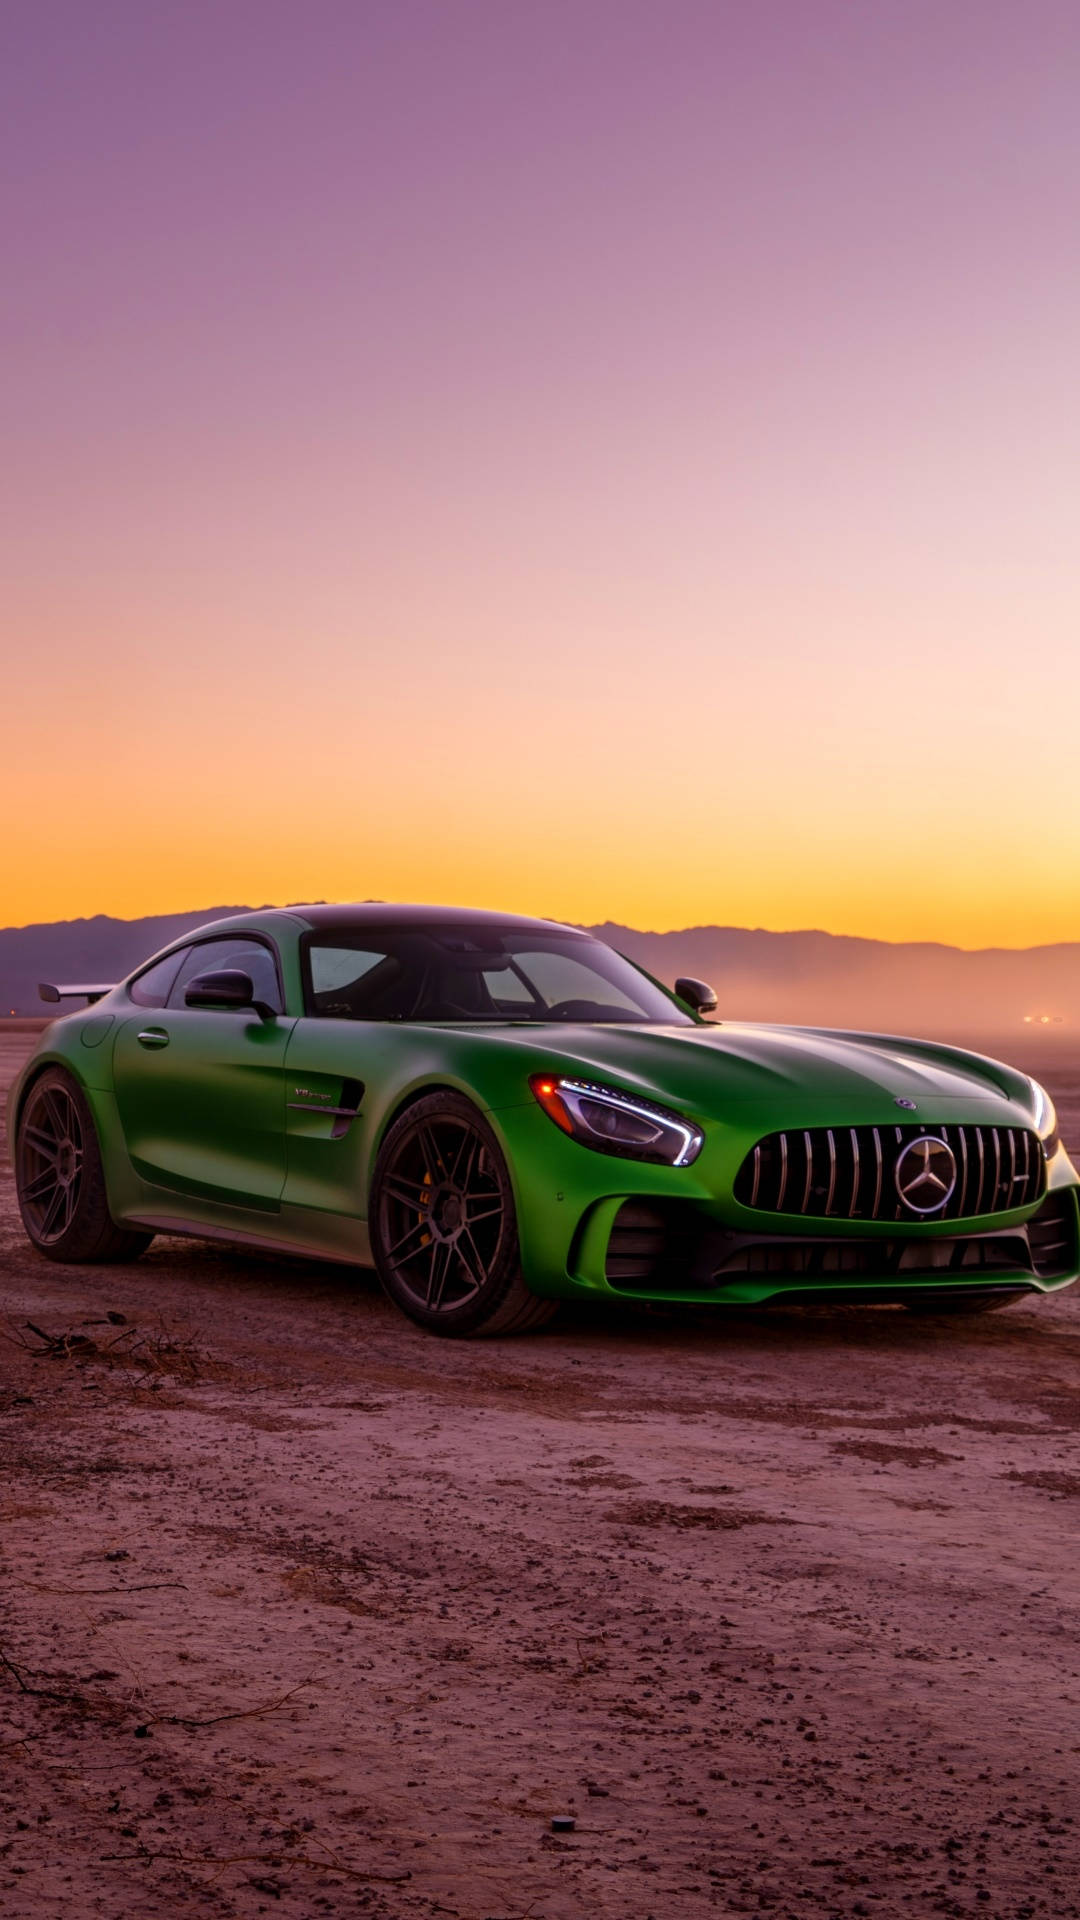 Green AMG During Sunset Wallpaper